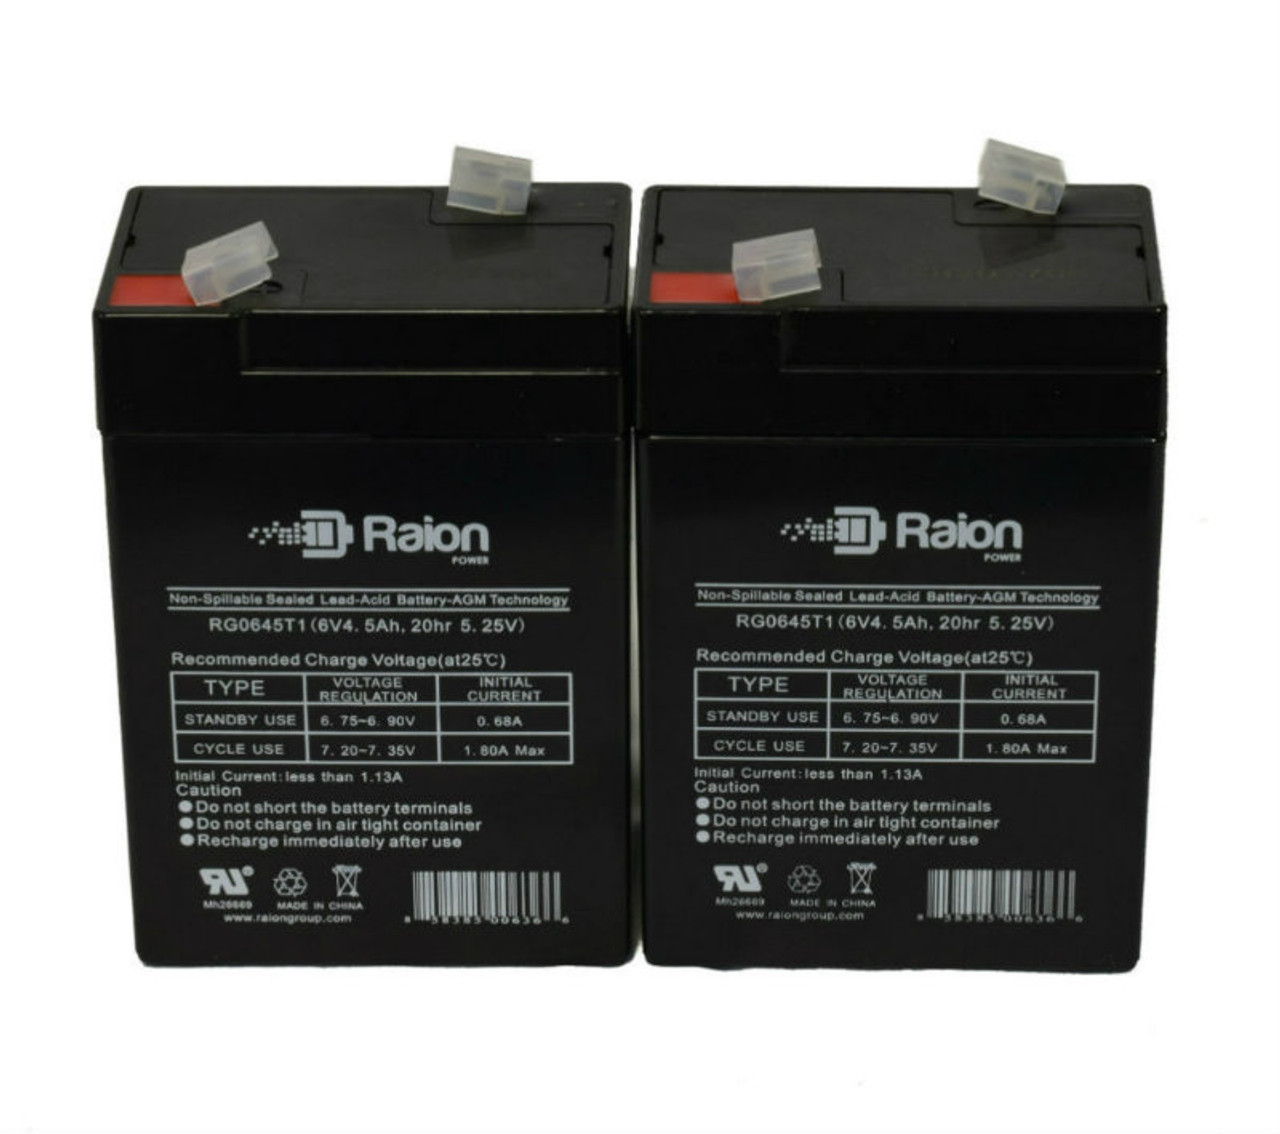 Raion Power 6V 4.5Ah Replacement Emergency Light Battery for Prescolite 88 - 2 Pack